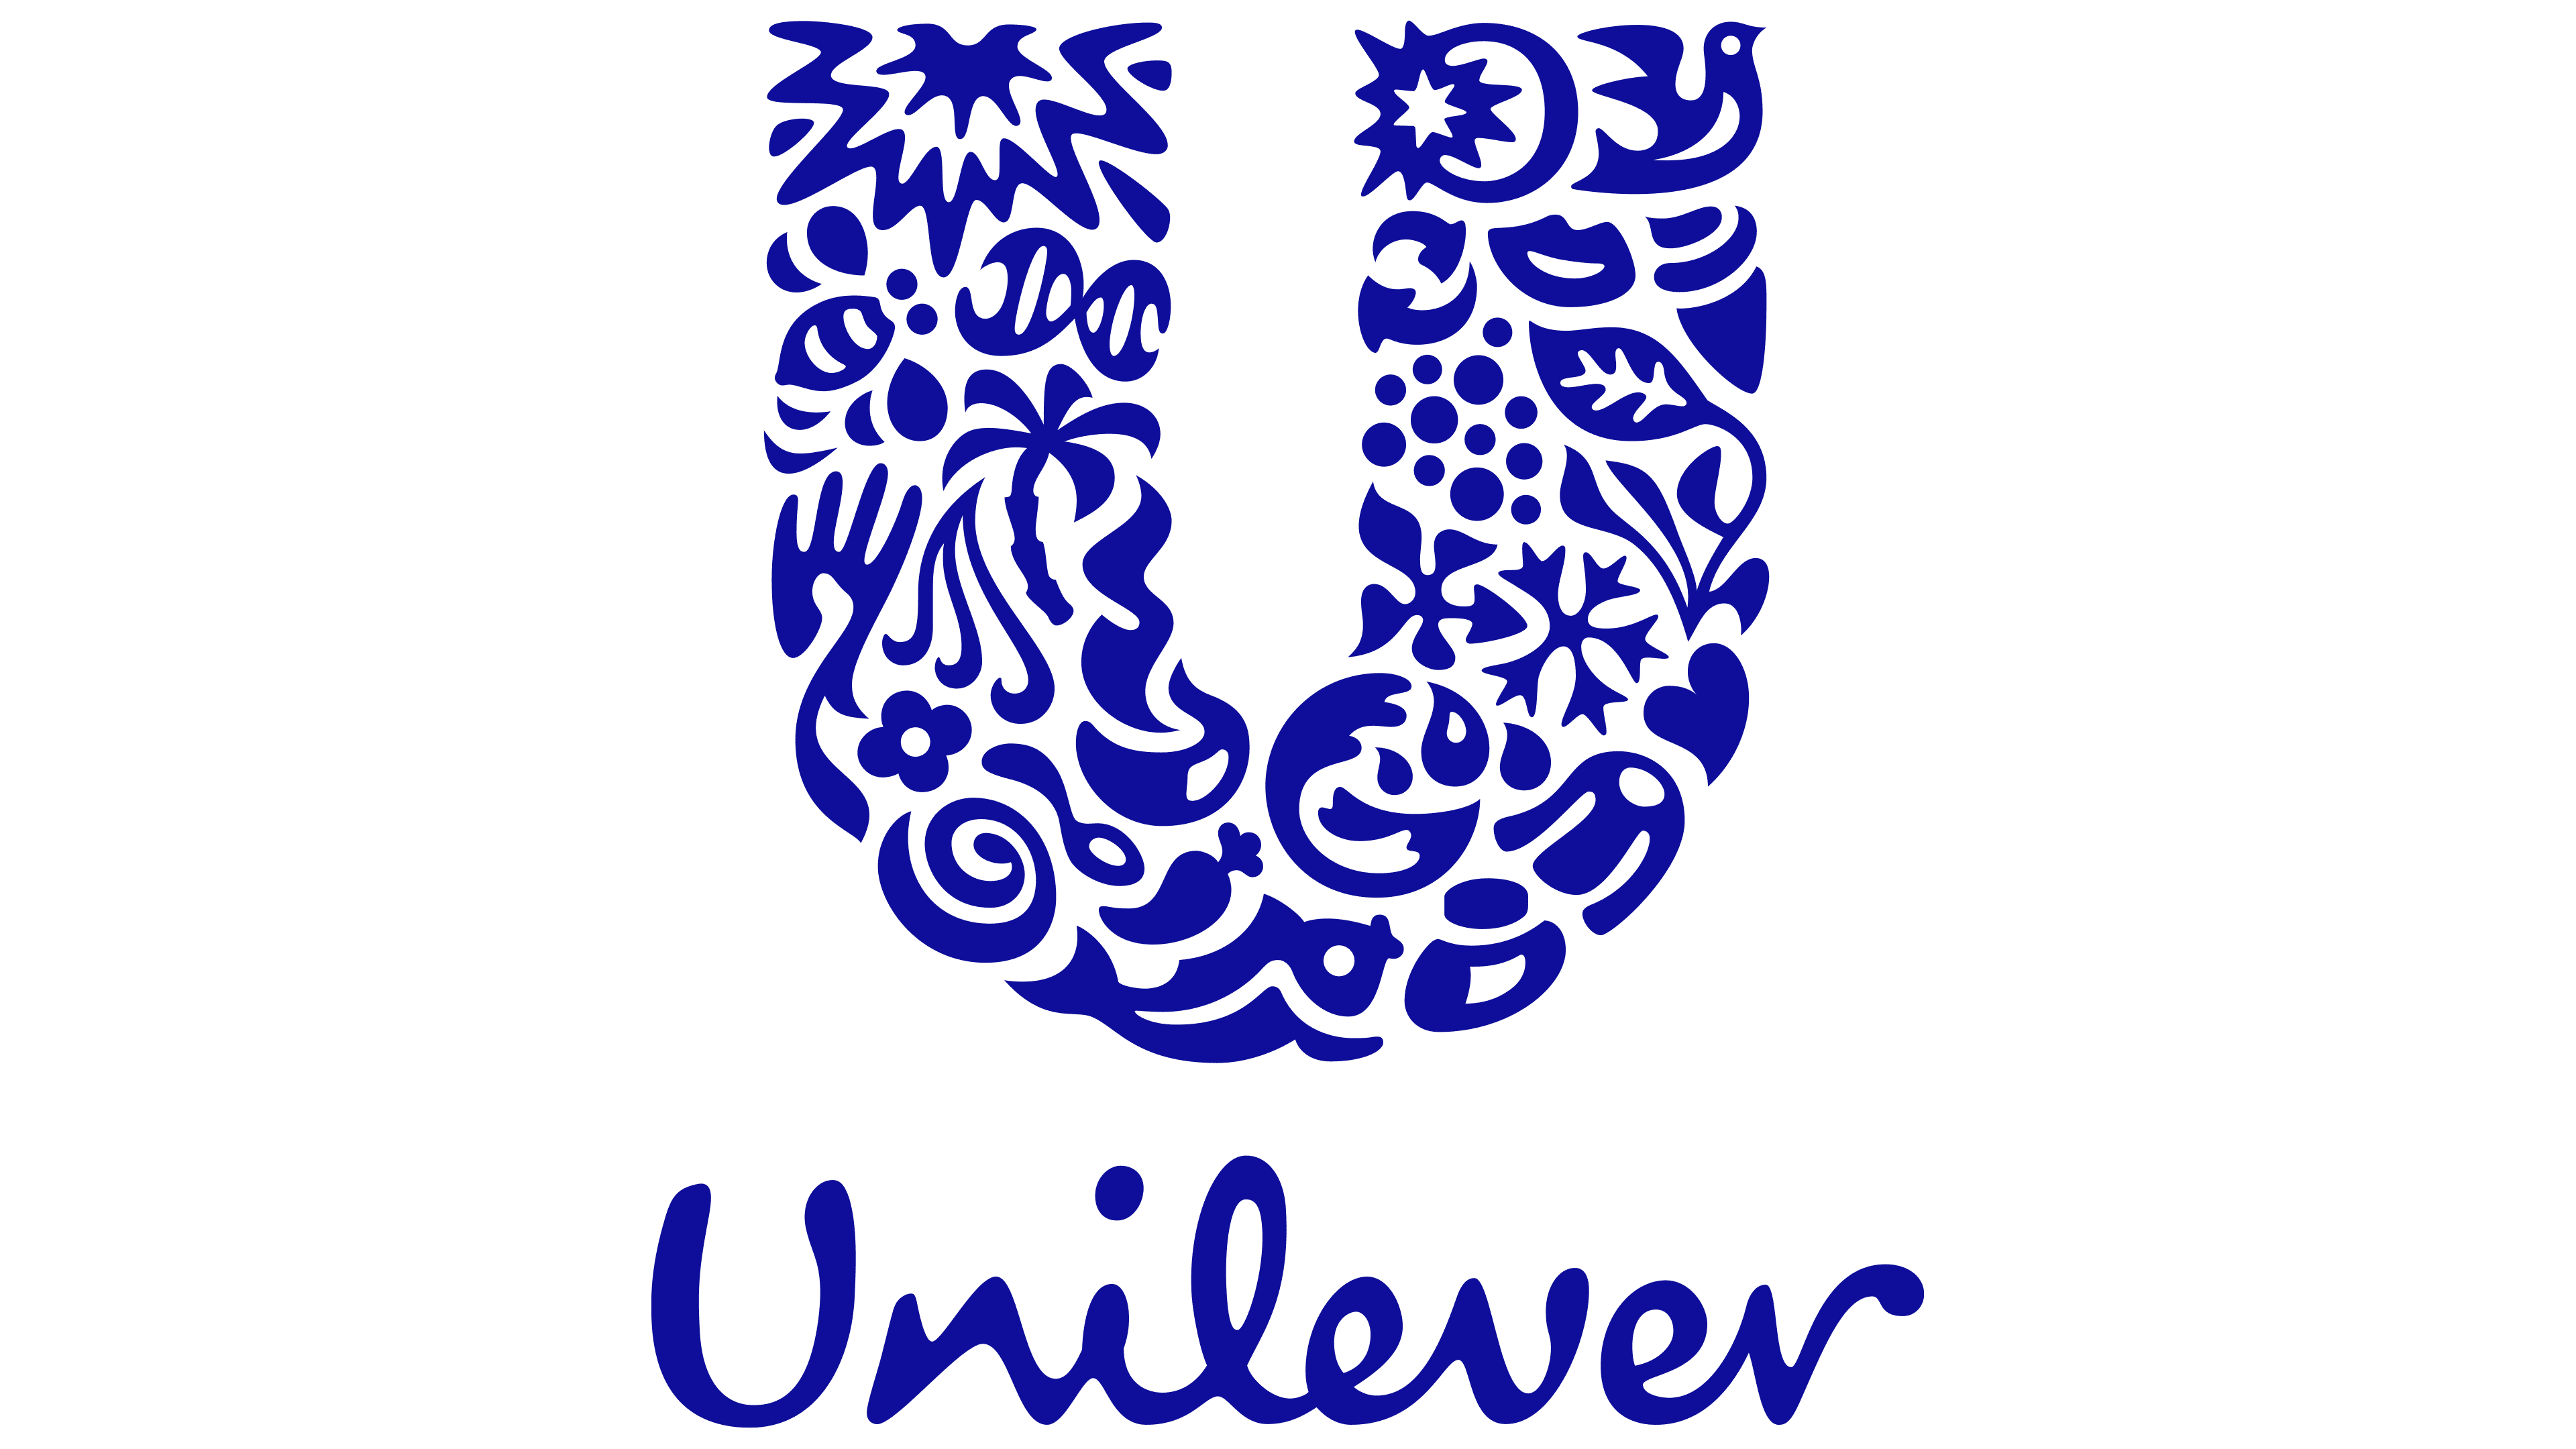 Unilever - logo